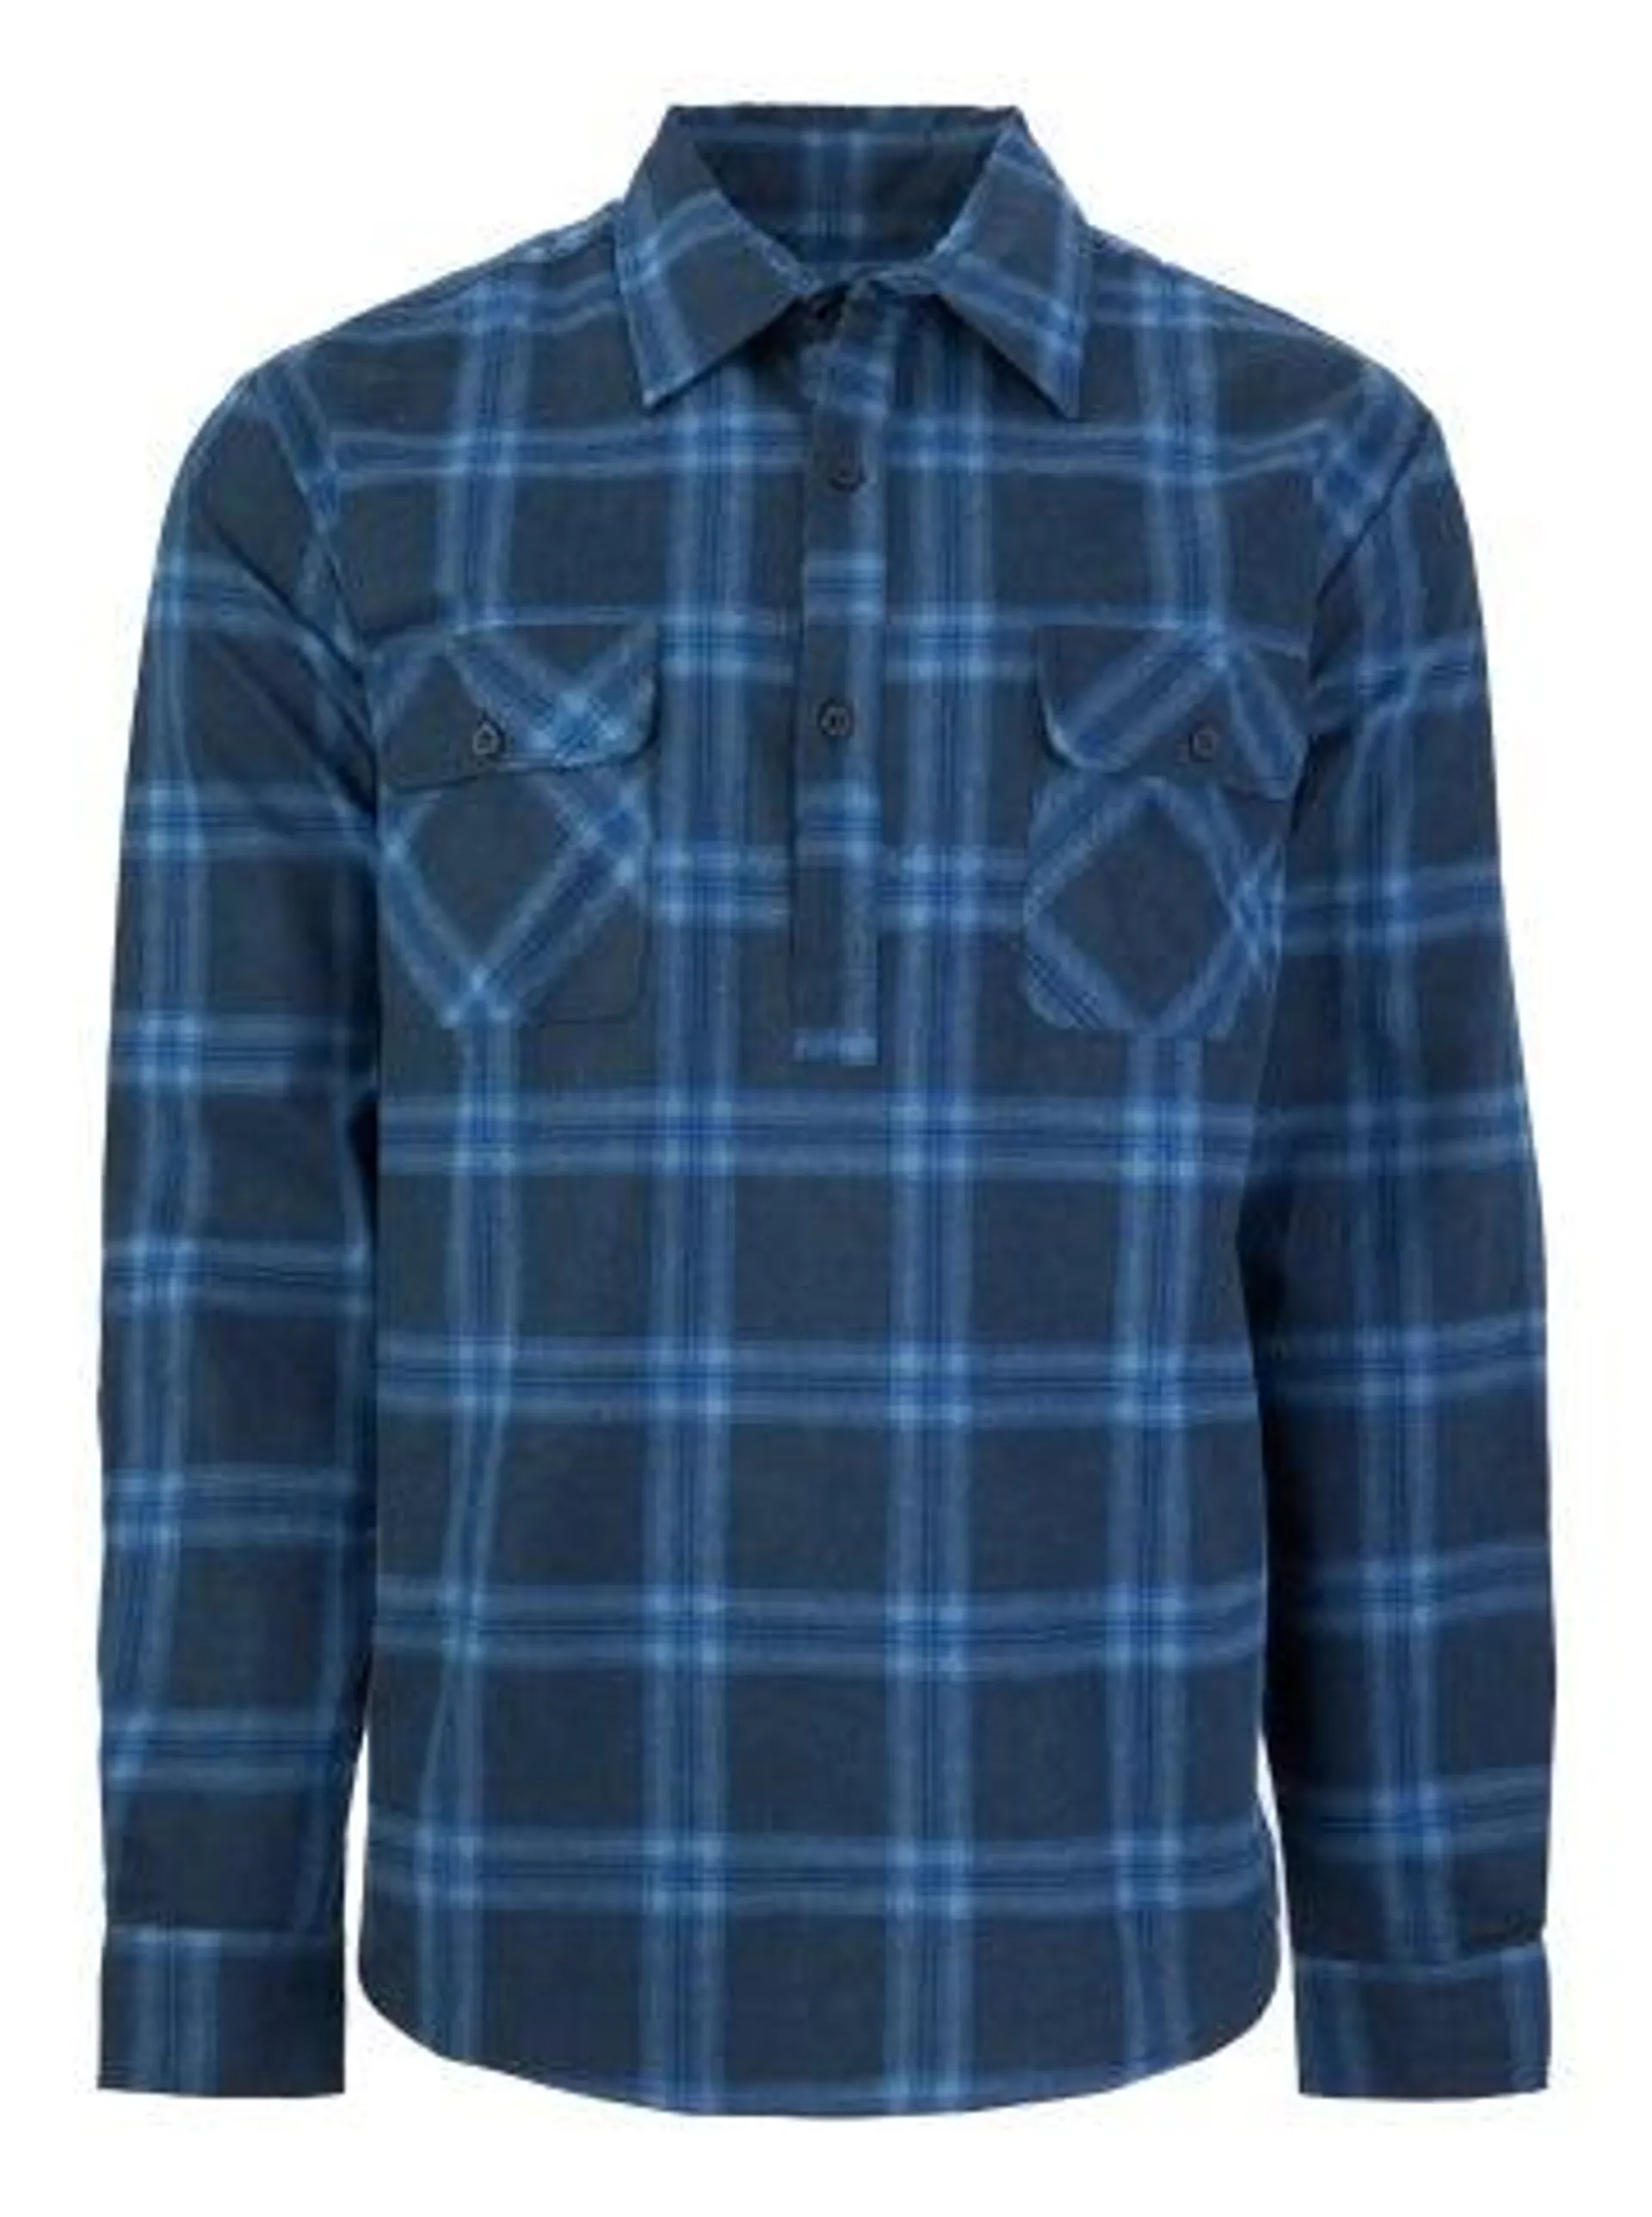 Men's 1/2 Placket Flannel Shirt in Blue/bright Blue/grey